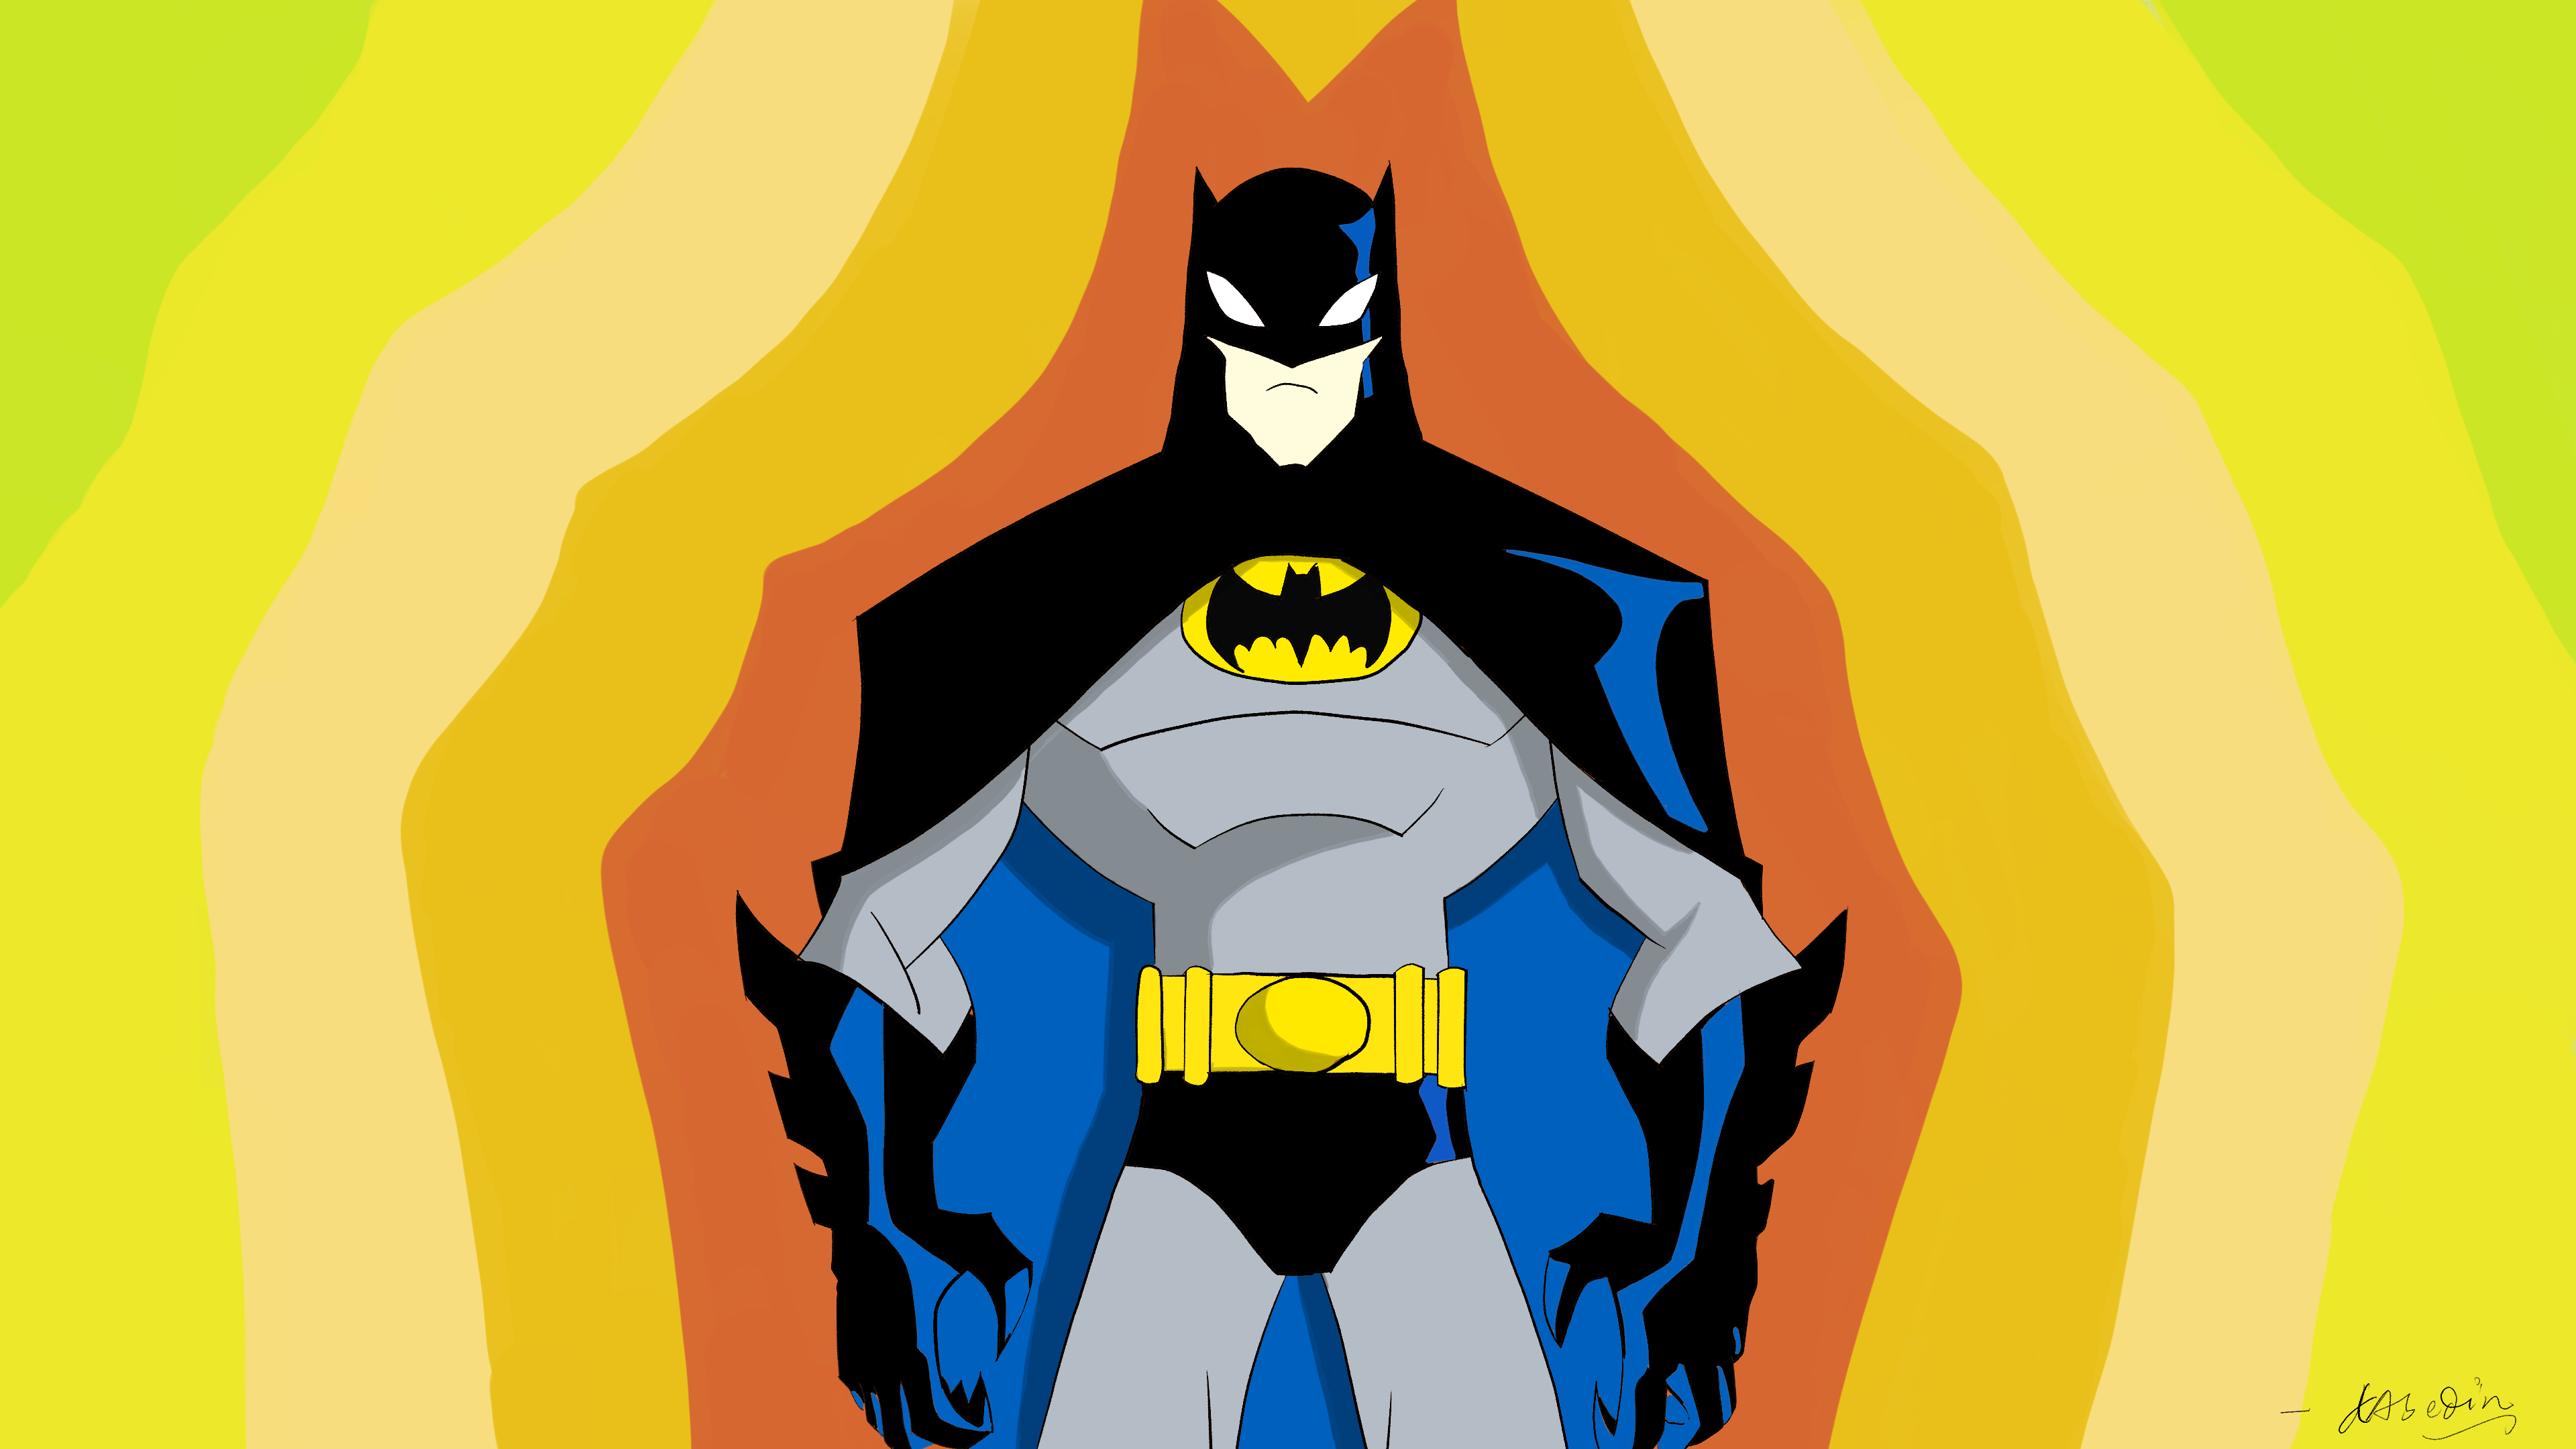 New Batman 4K Illustration Wallpaper, HD Superheroes 4K Wallpapers